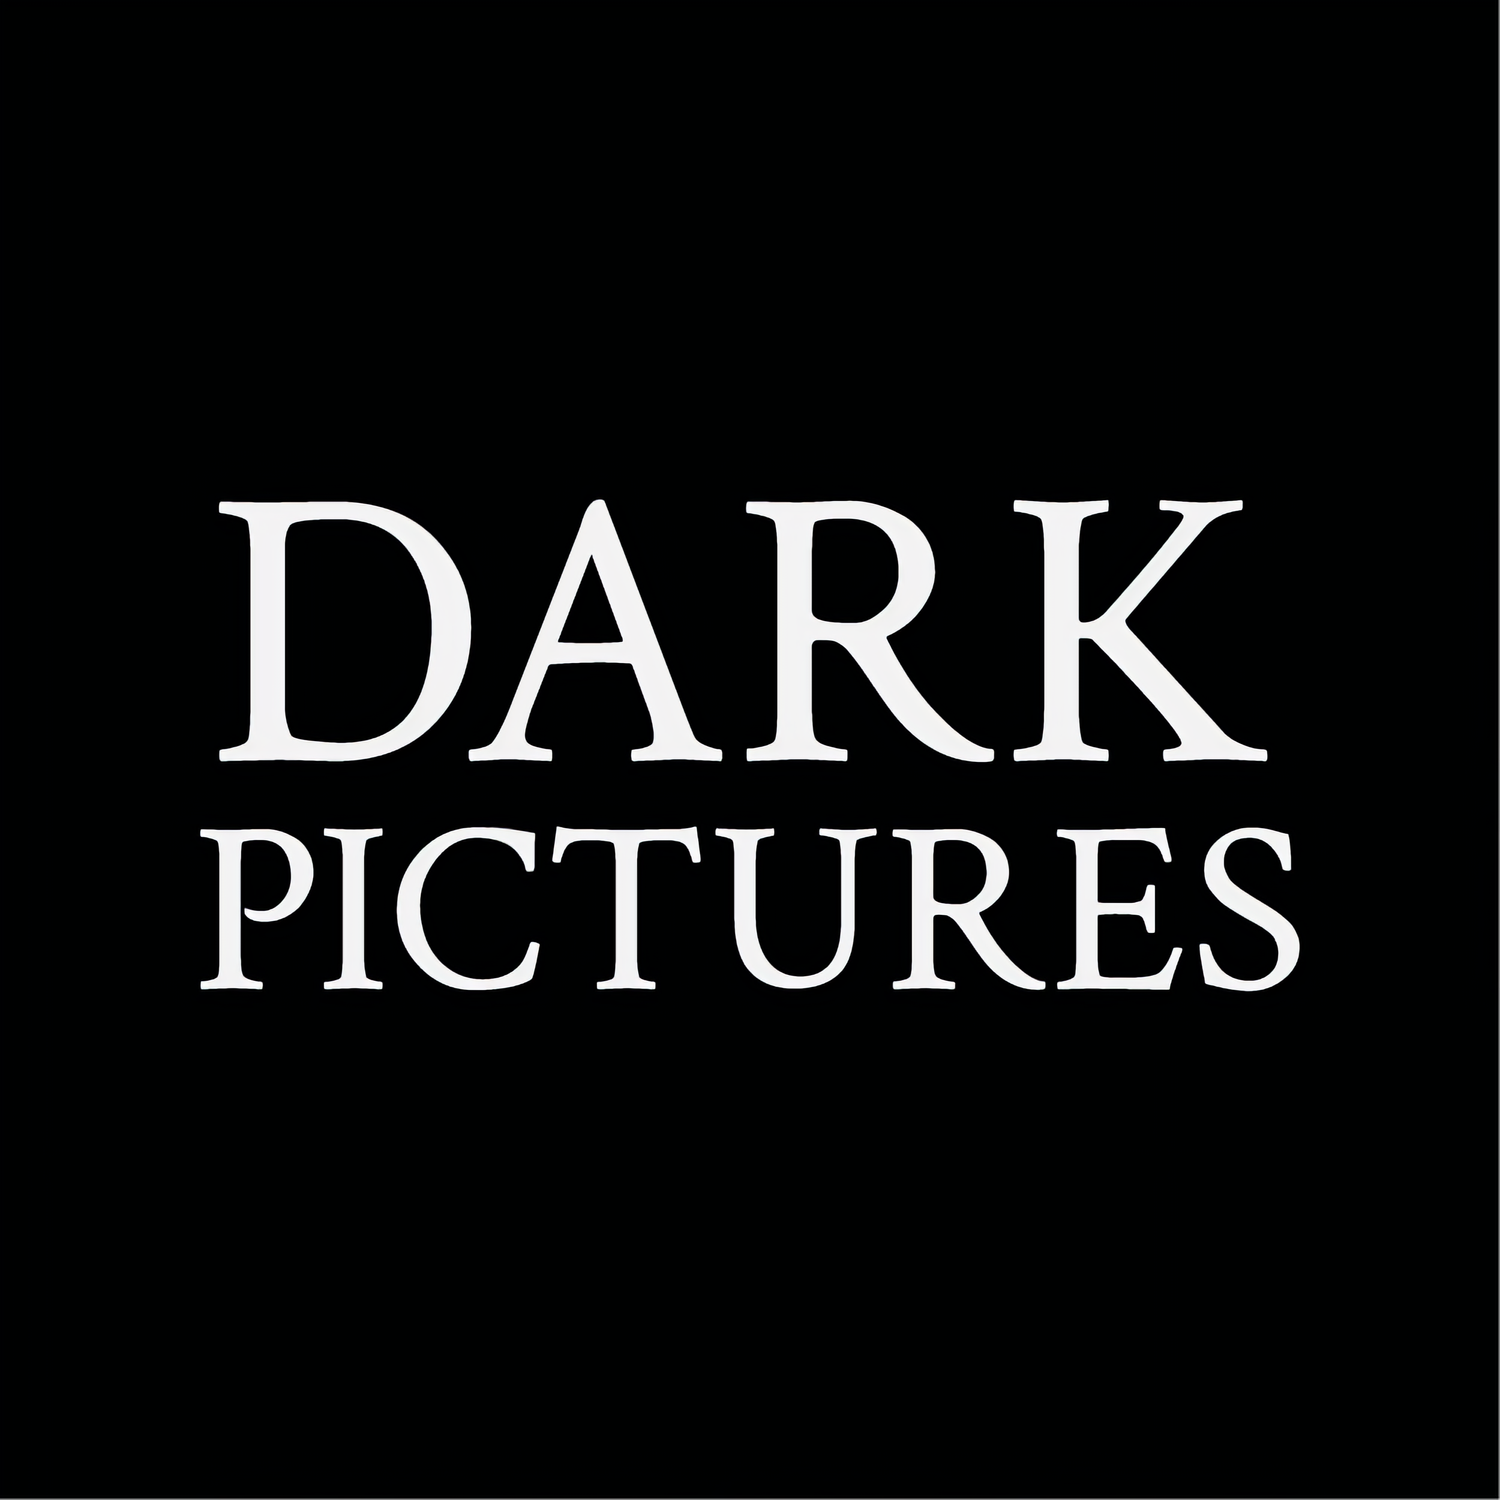 DARK PICTURES